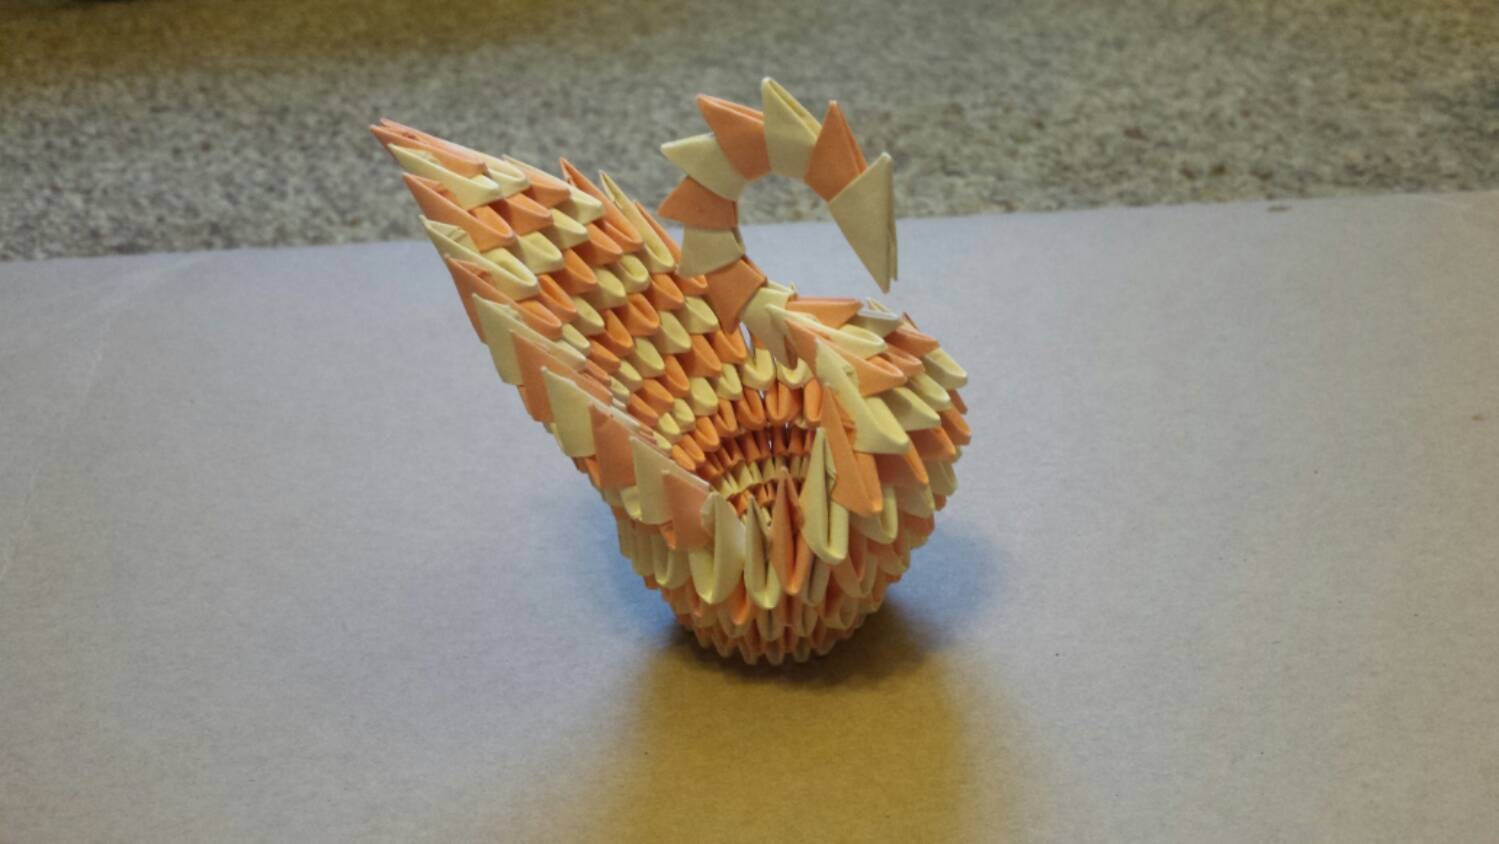 Handmade golden venture origami swanpeach and by FoxtailTaxidermy